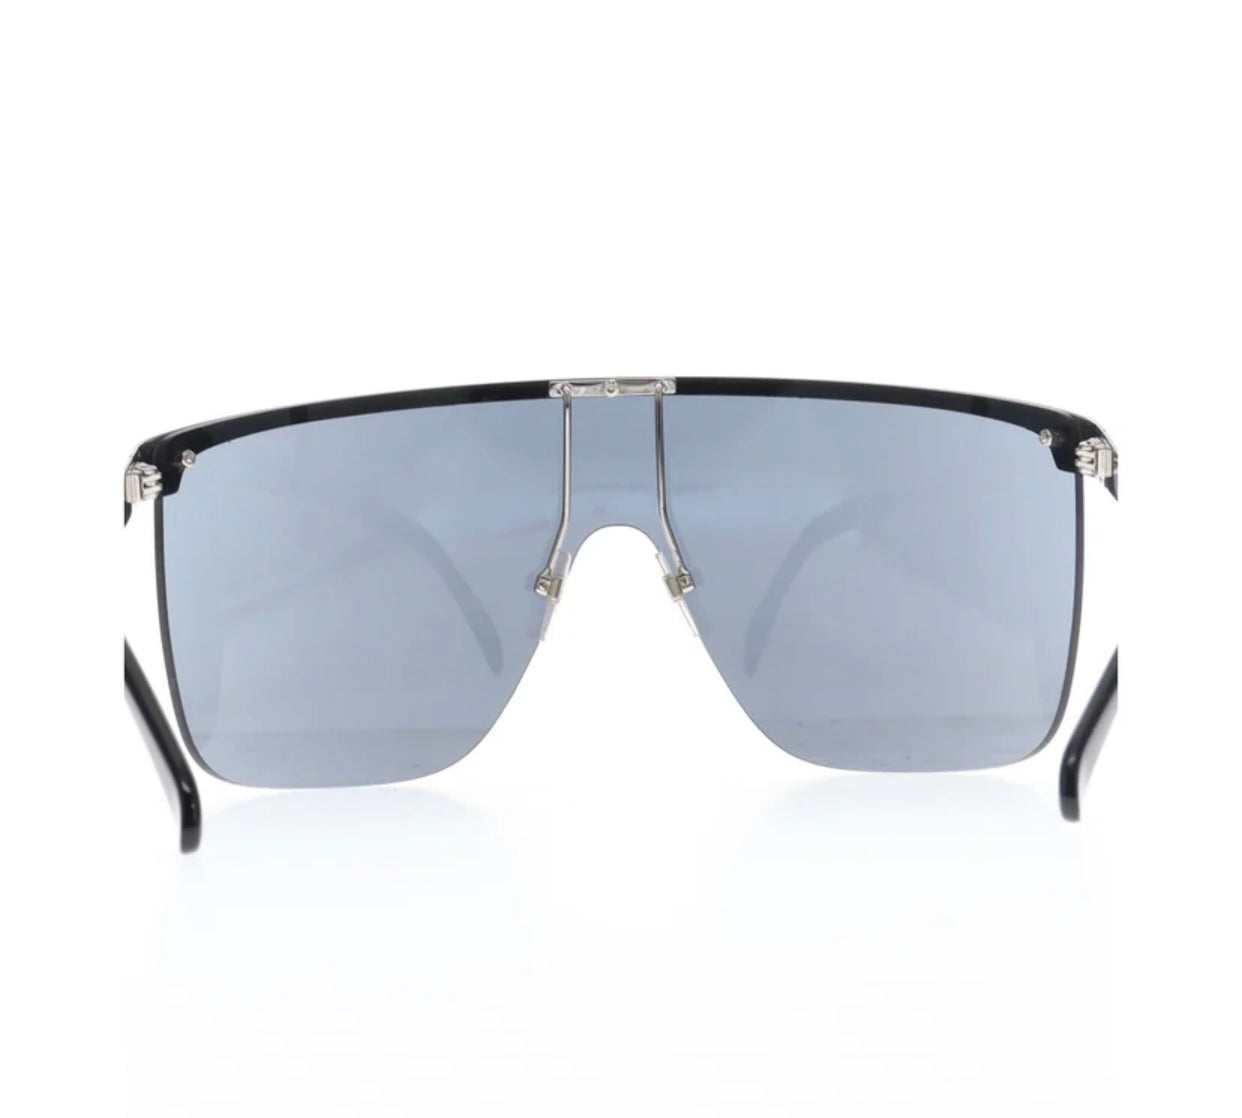 Givenchy Black Flash Sunglasses